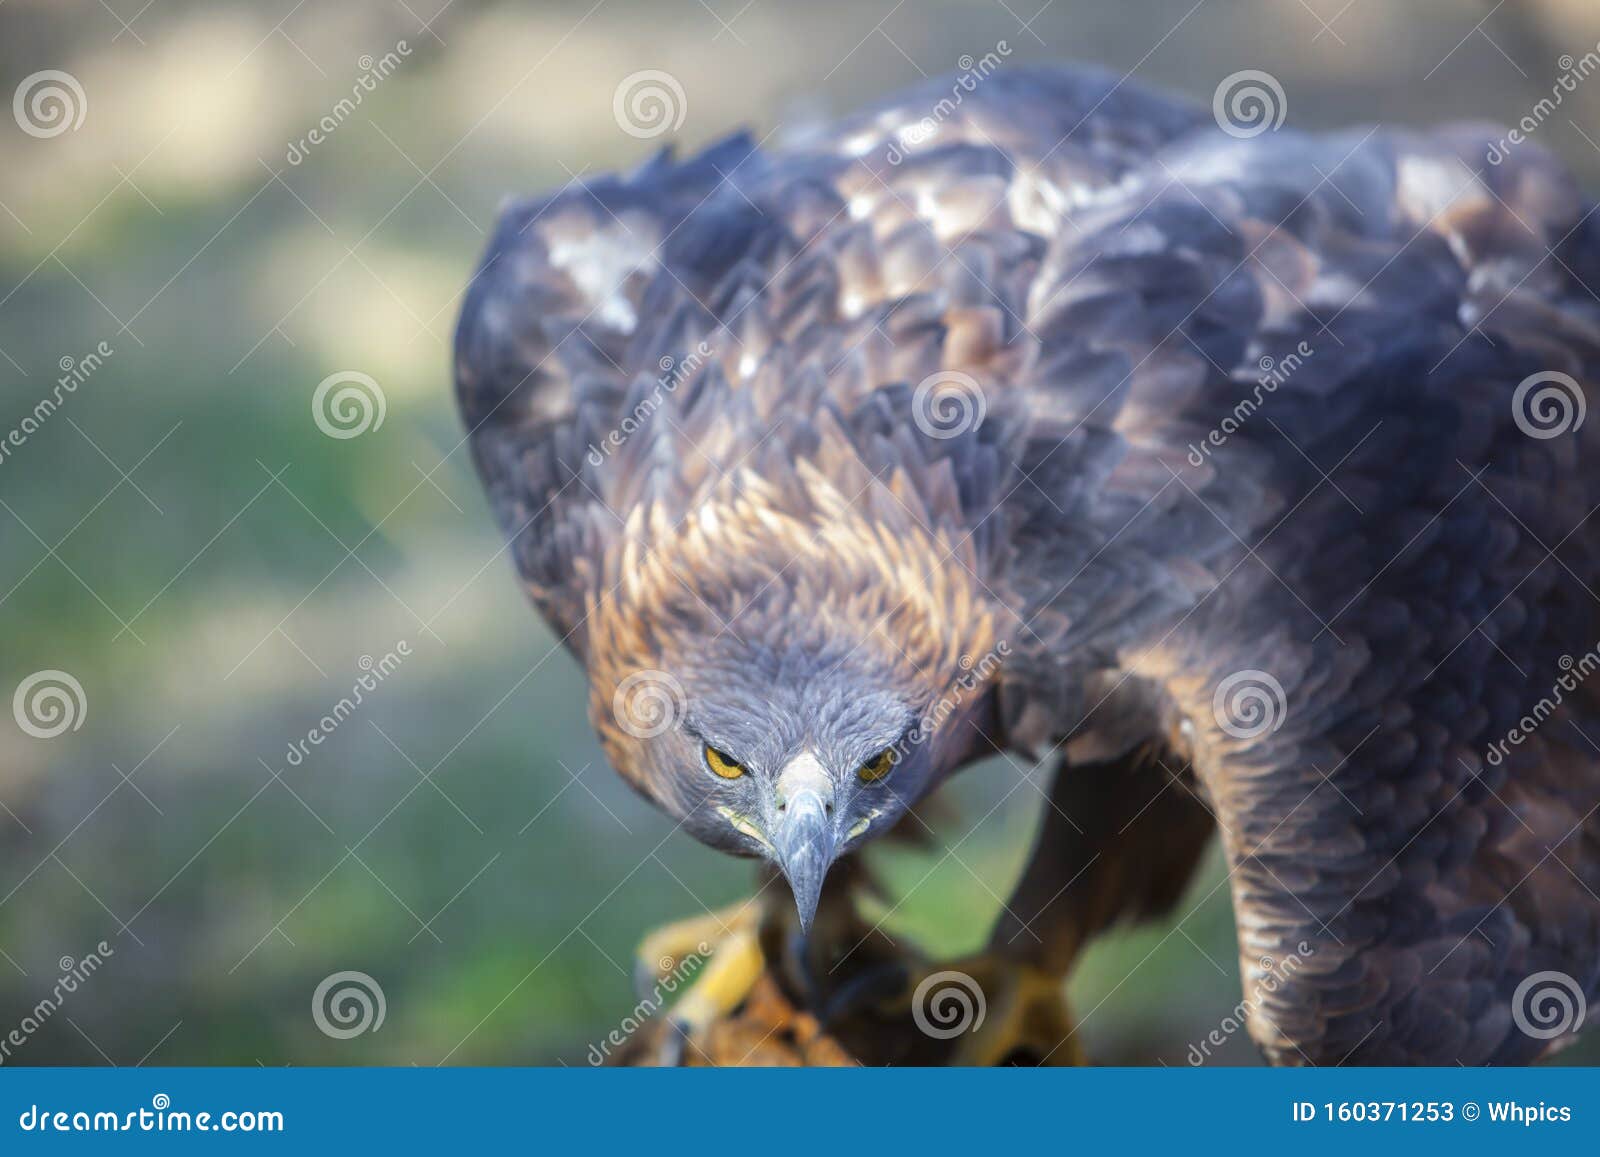 iberian golden eagle or aquila chrysaetos homeyeri